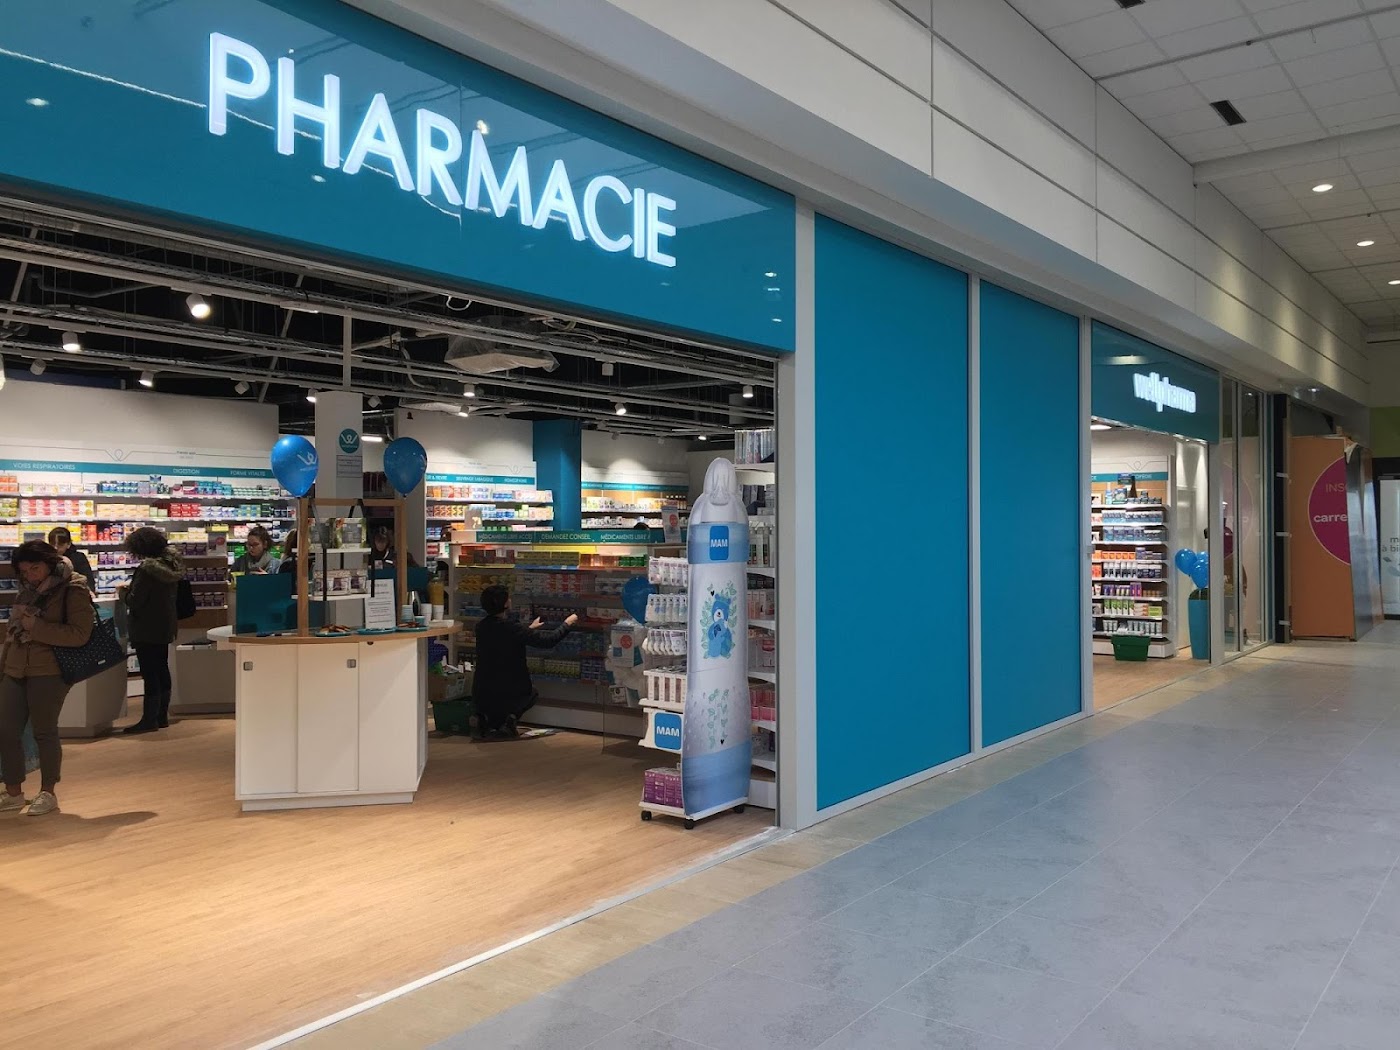 Pharmacie wellpharma | Pharmacie de Carrefour Cesson